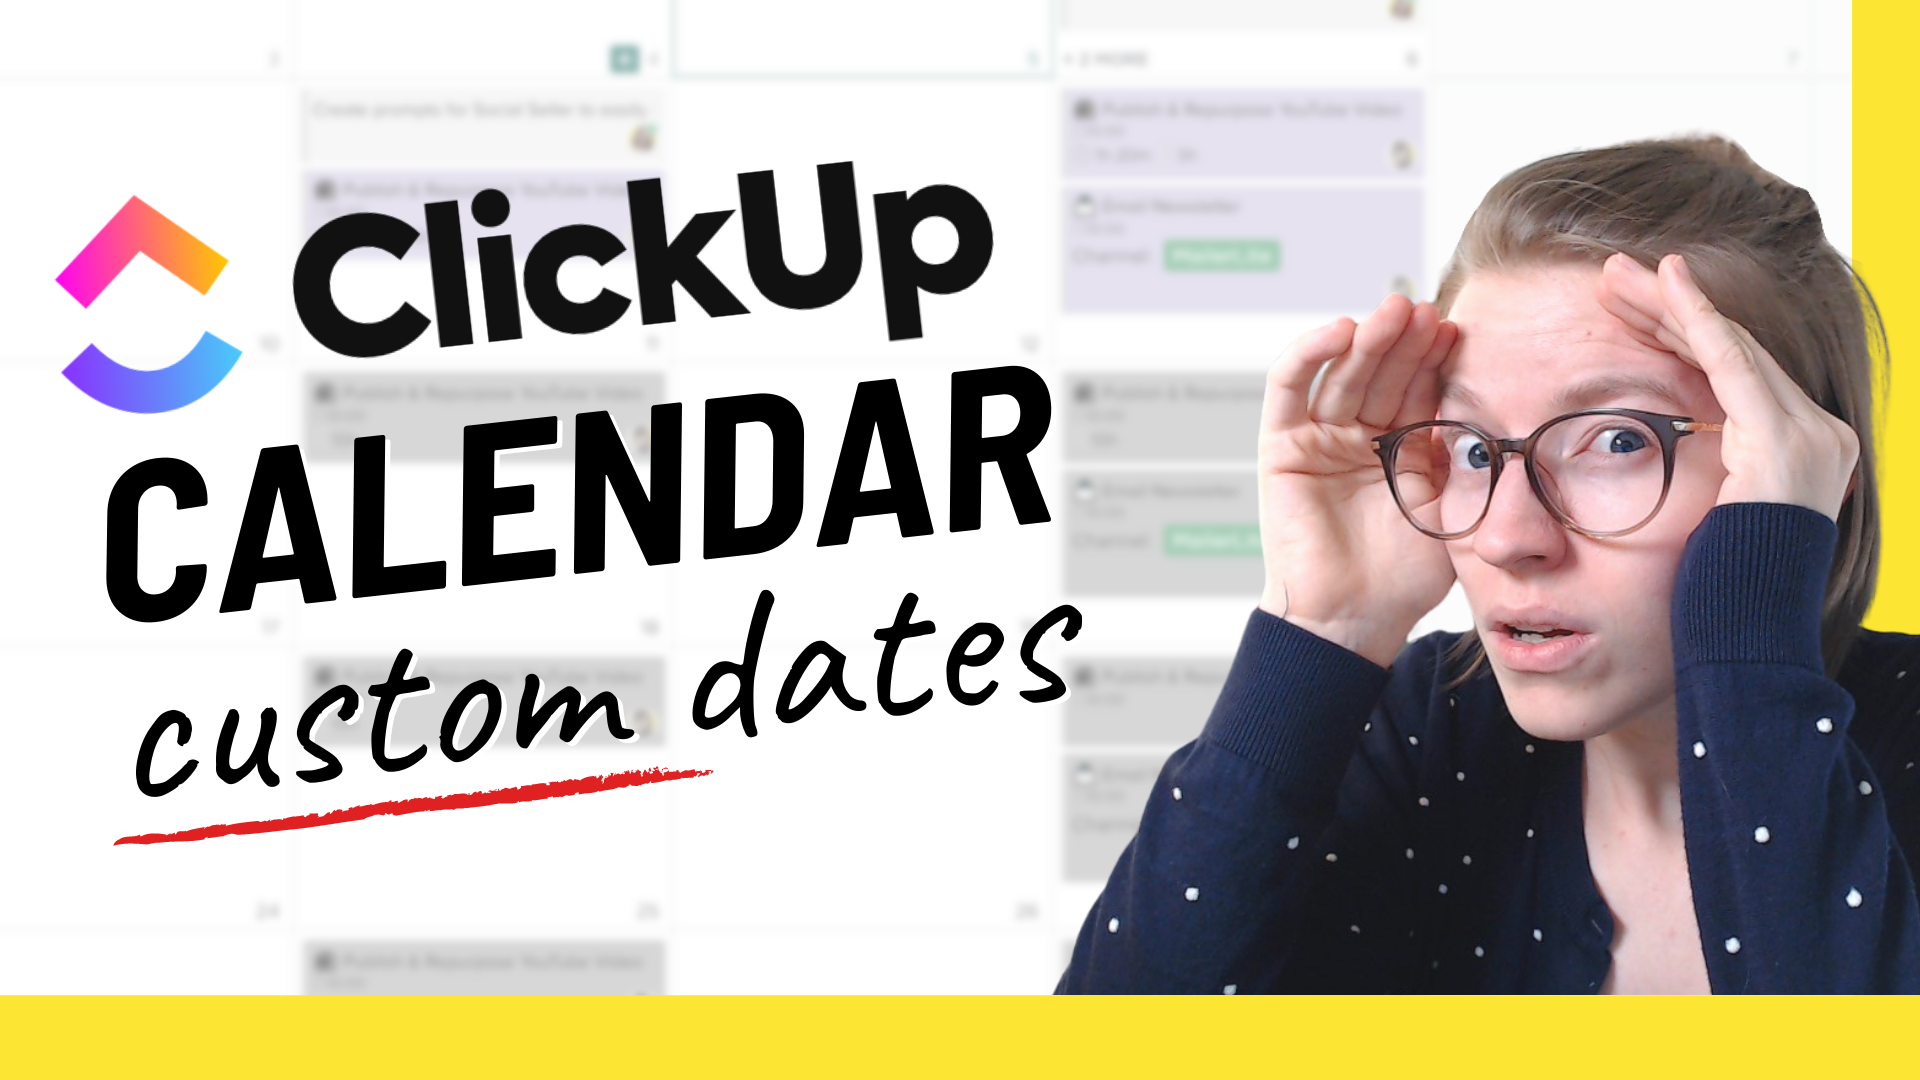 ClickUp Calendar View and Custom Dates Explained ProcessDriven